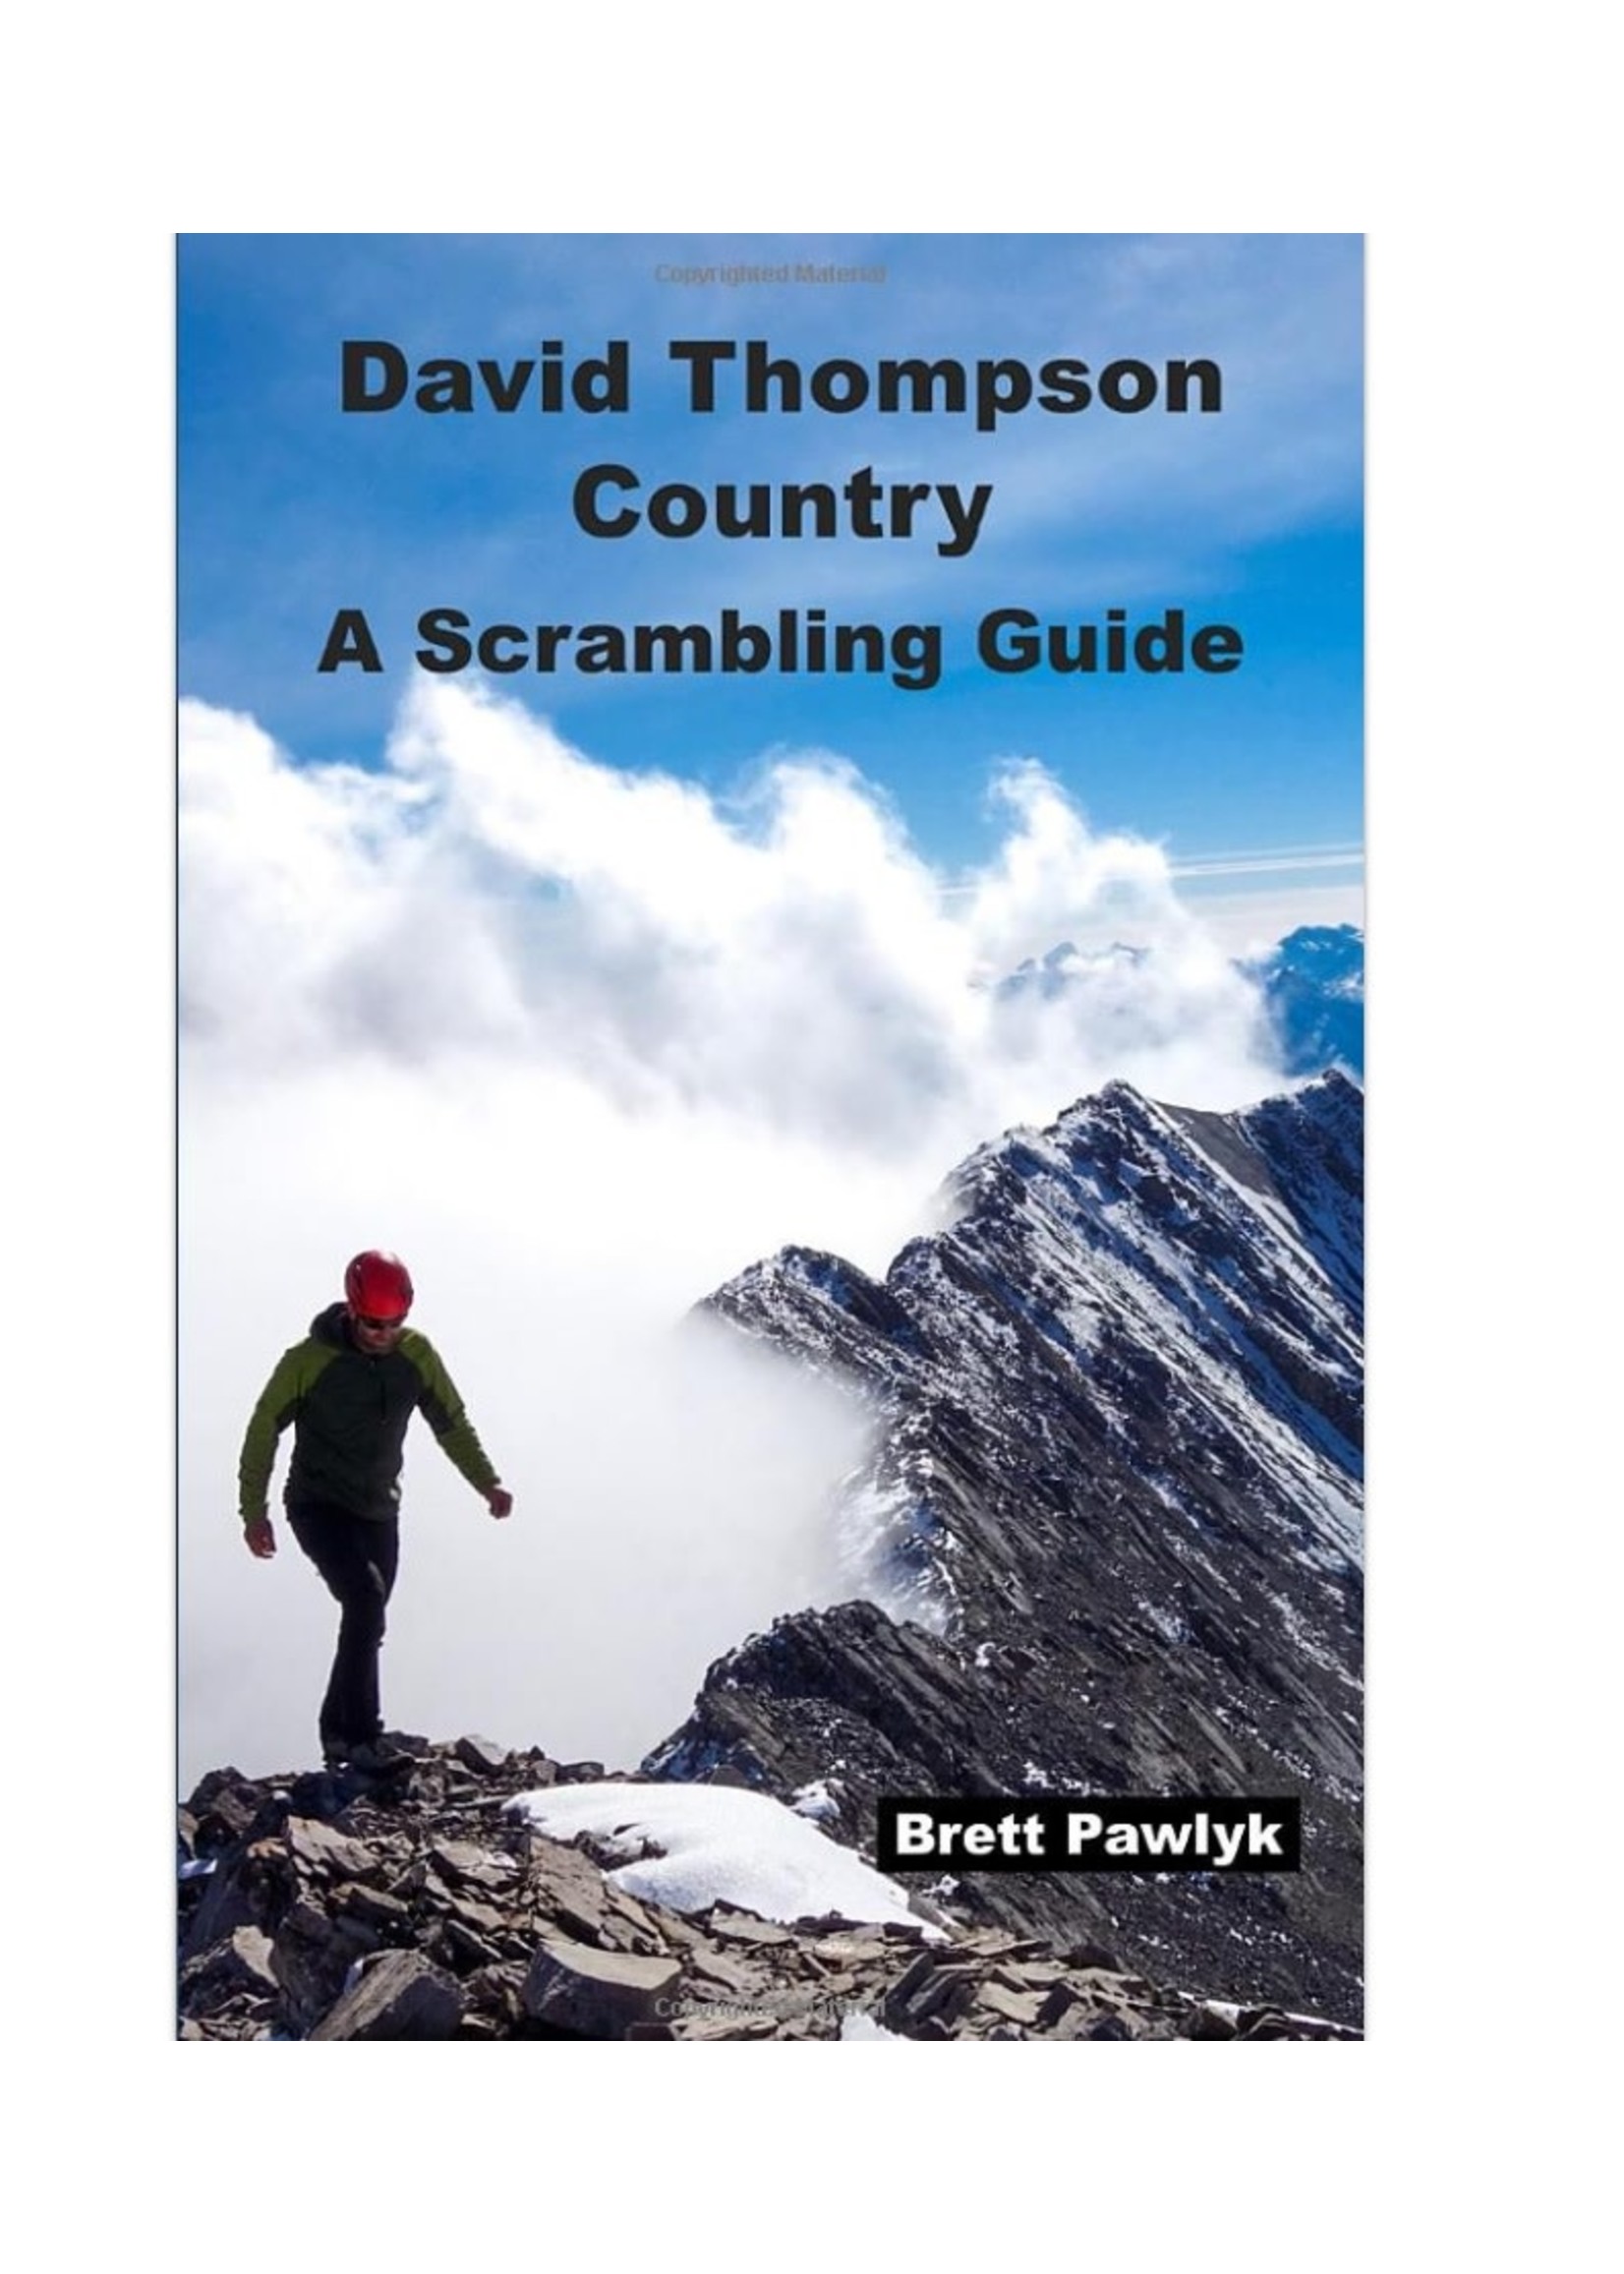 Livre guide David Thompson Scrambling